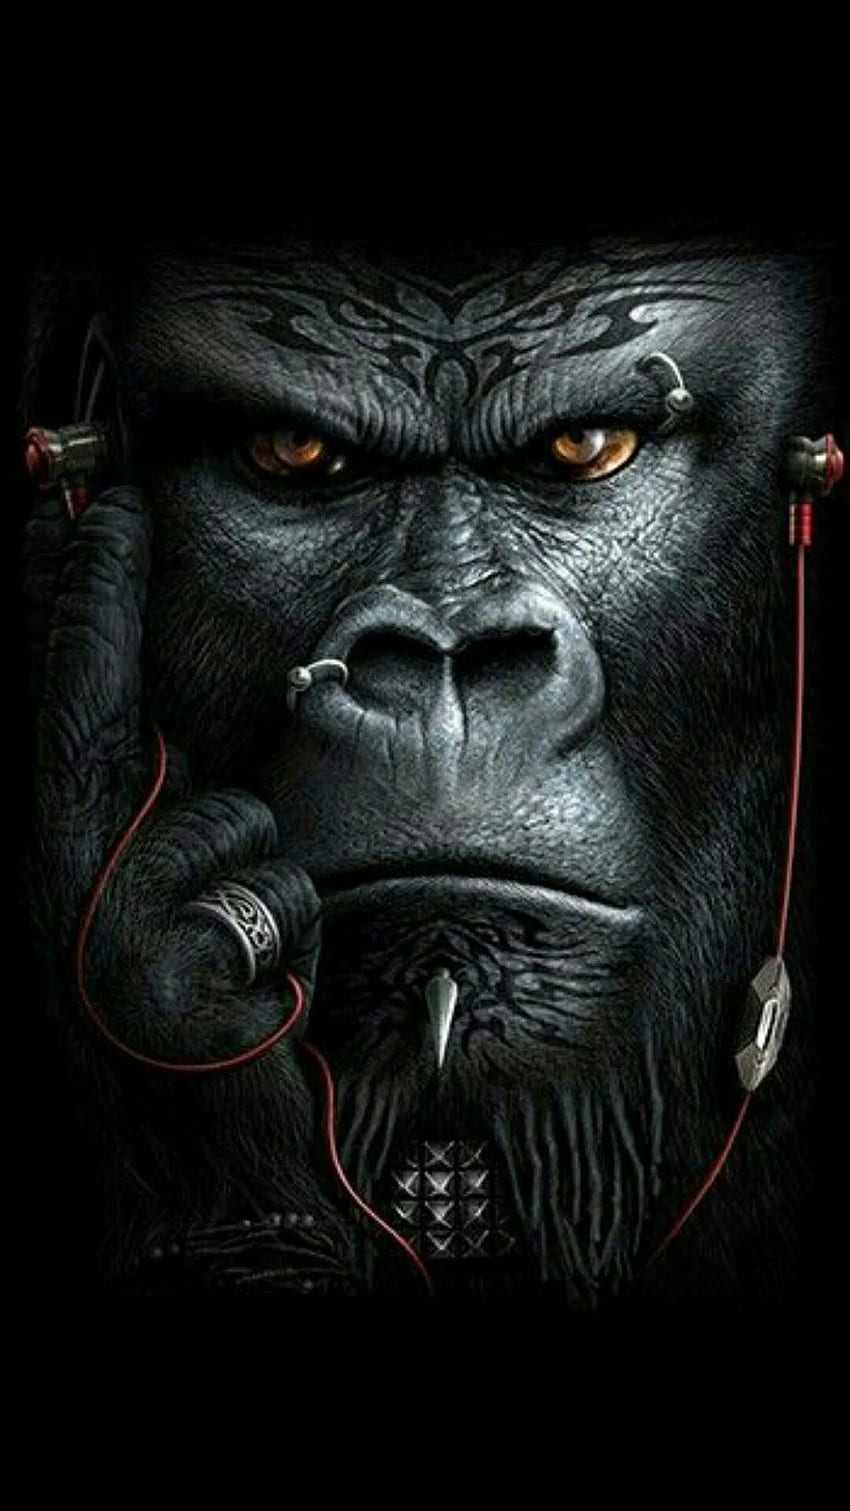 Gorilla by Sarah  Killer Bee Tattoo Studio  Facebook